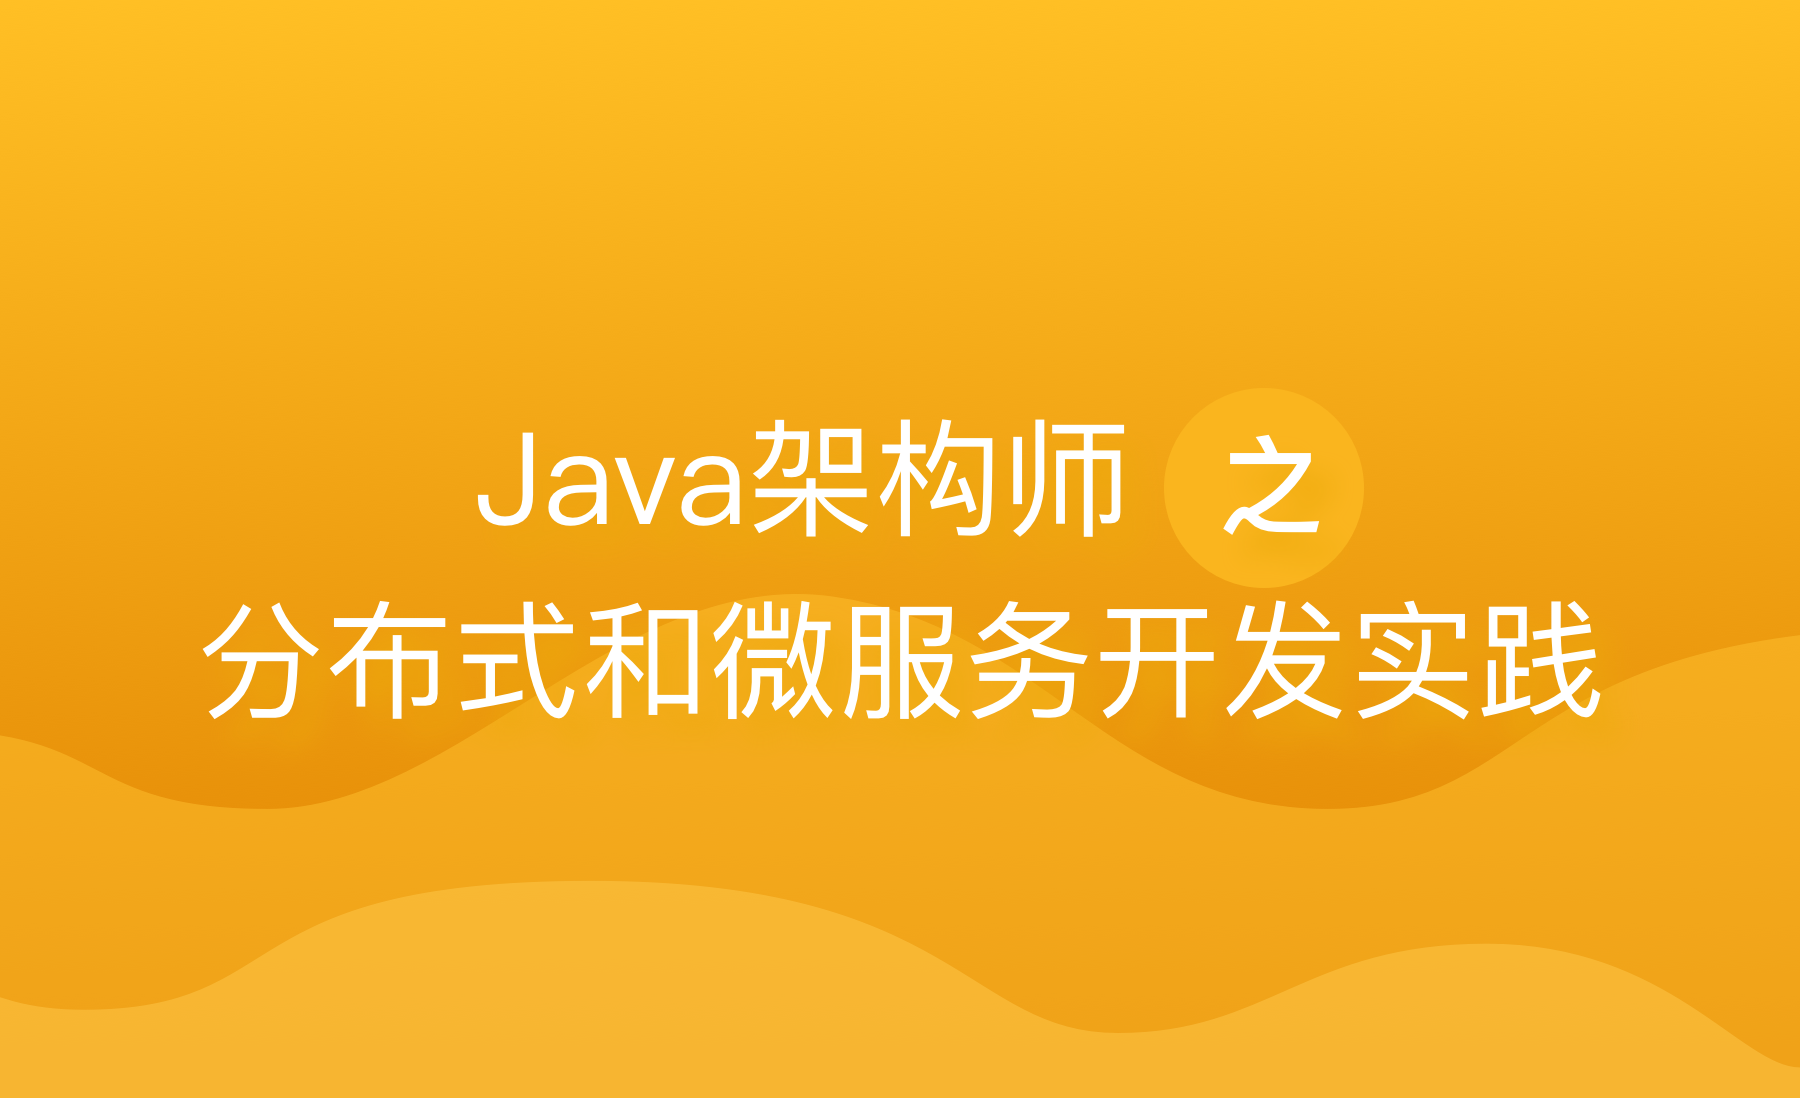 Java 架构师之分布式和微服务开发实践